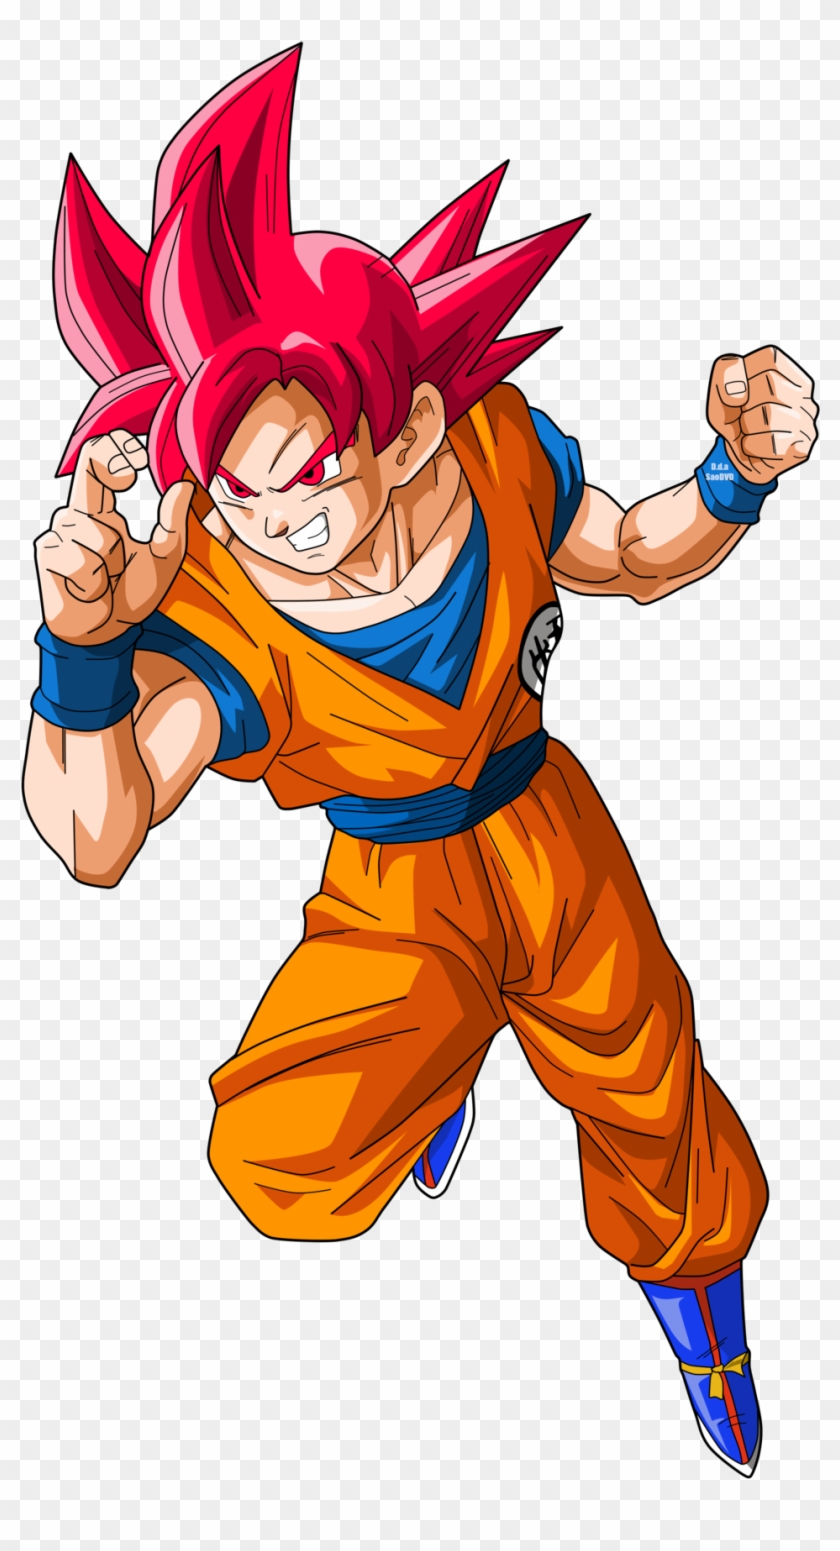 Goku Super Saiyan God PNG Image